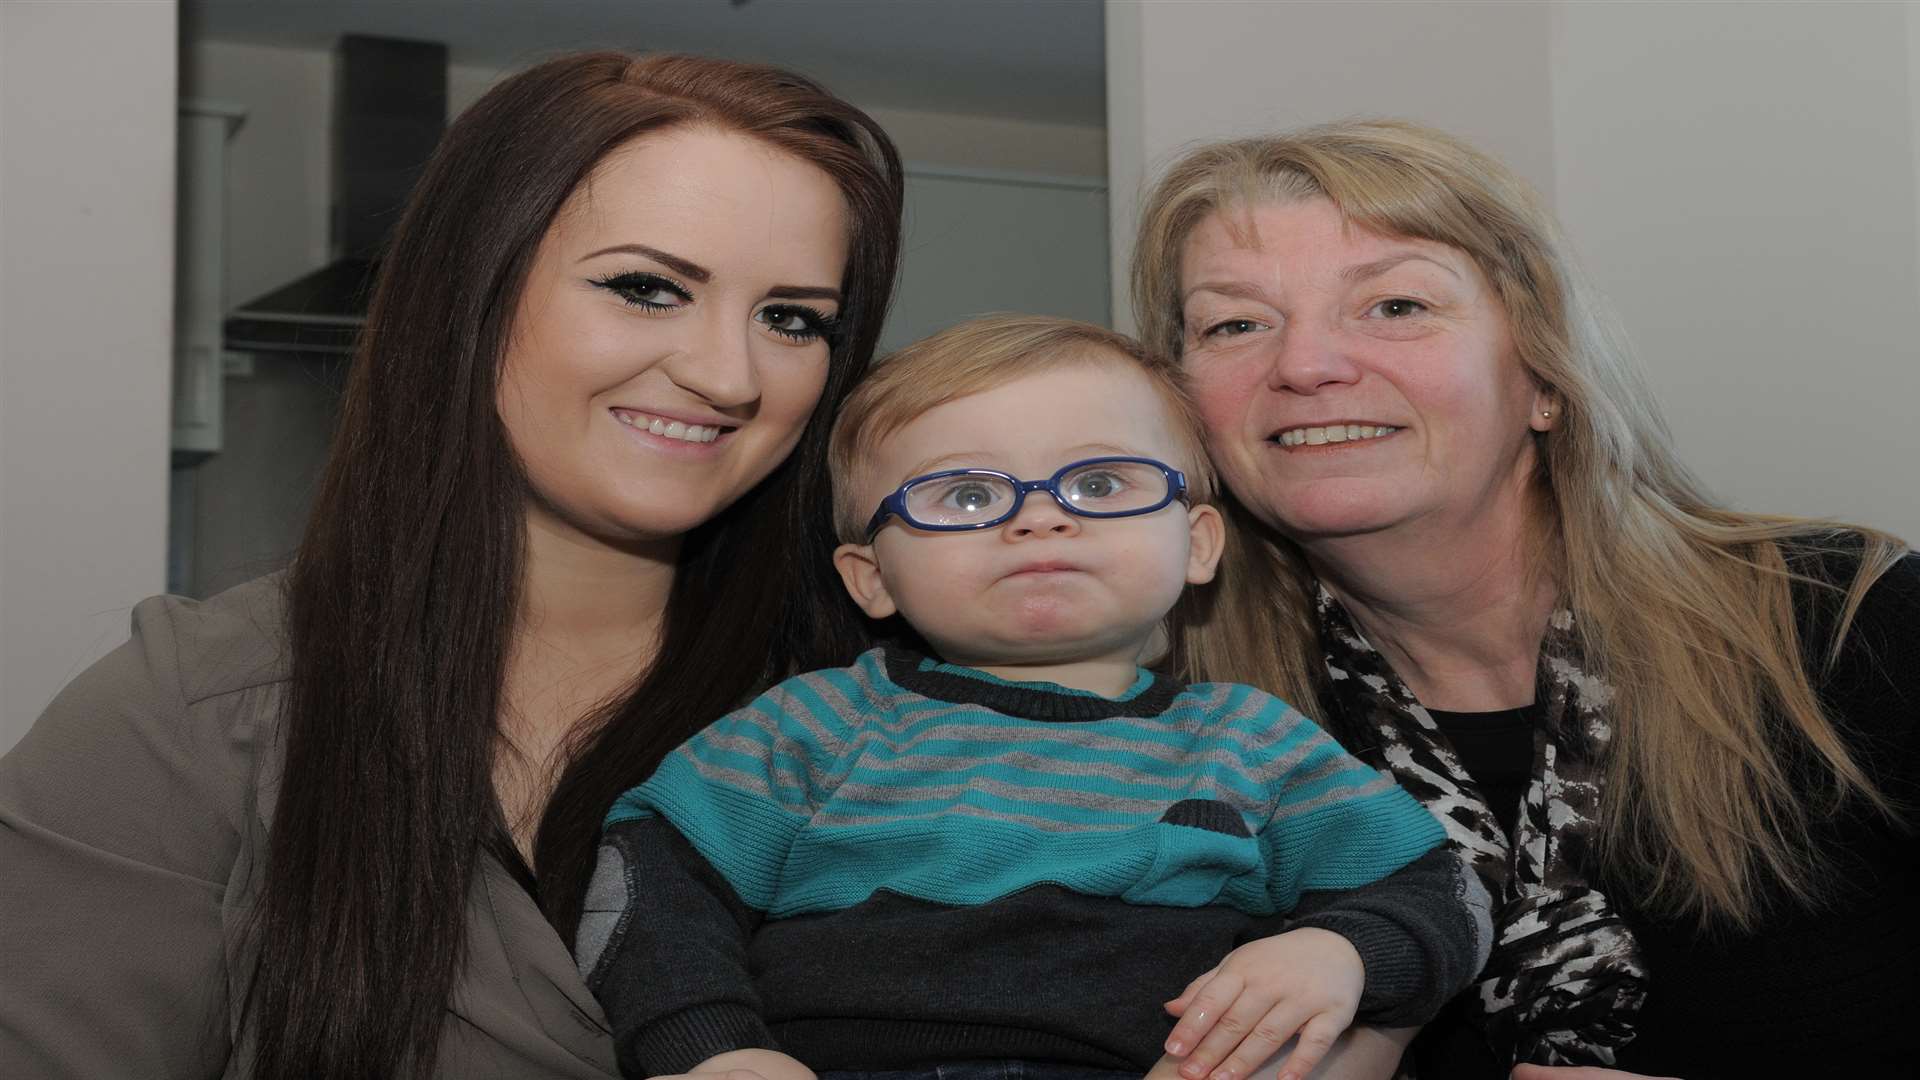 Midwife Debbie Newman, right, has won an award for saving baby Mason's life